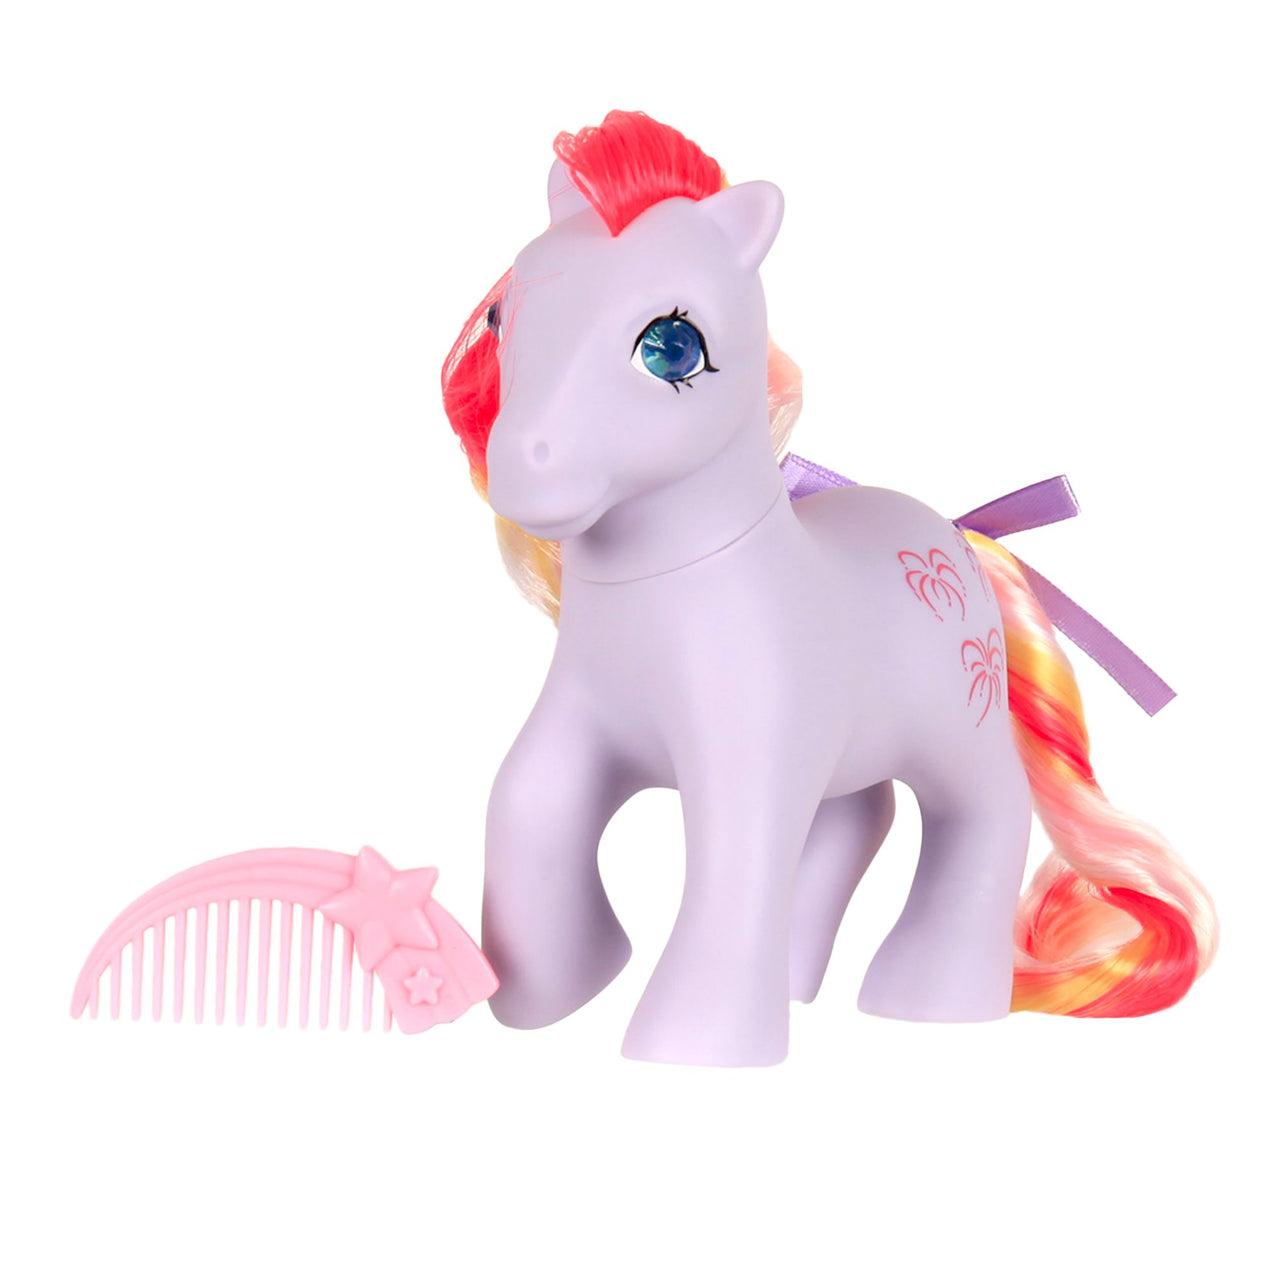 My Little Pony Classics Rainbow Ponies Sky Rocket My Little Pony